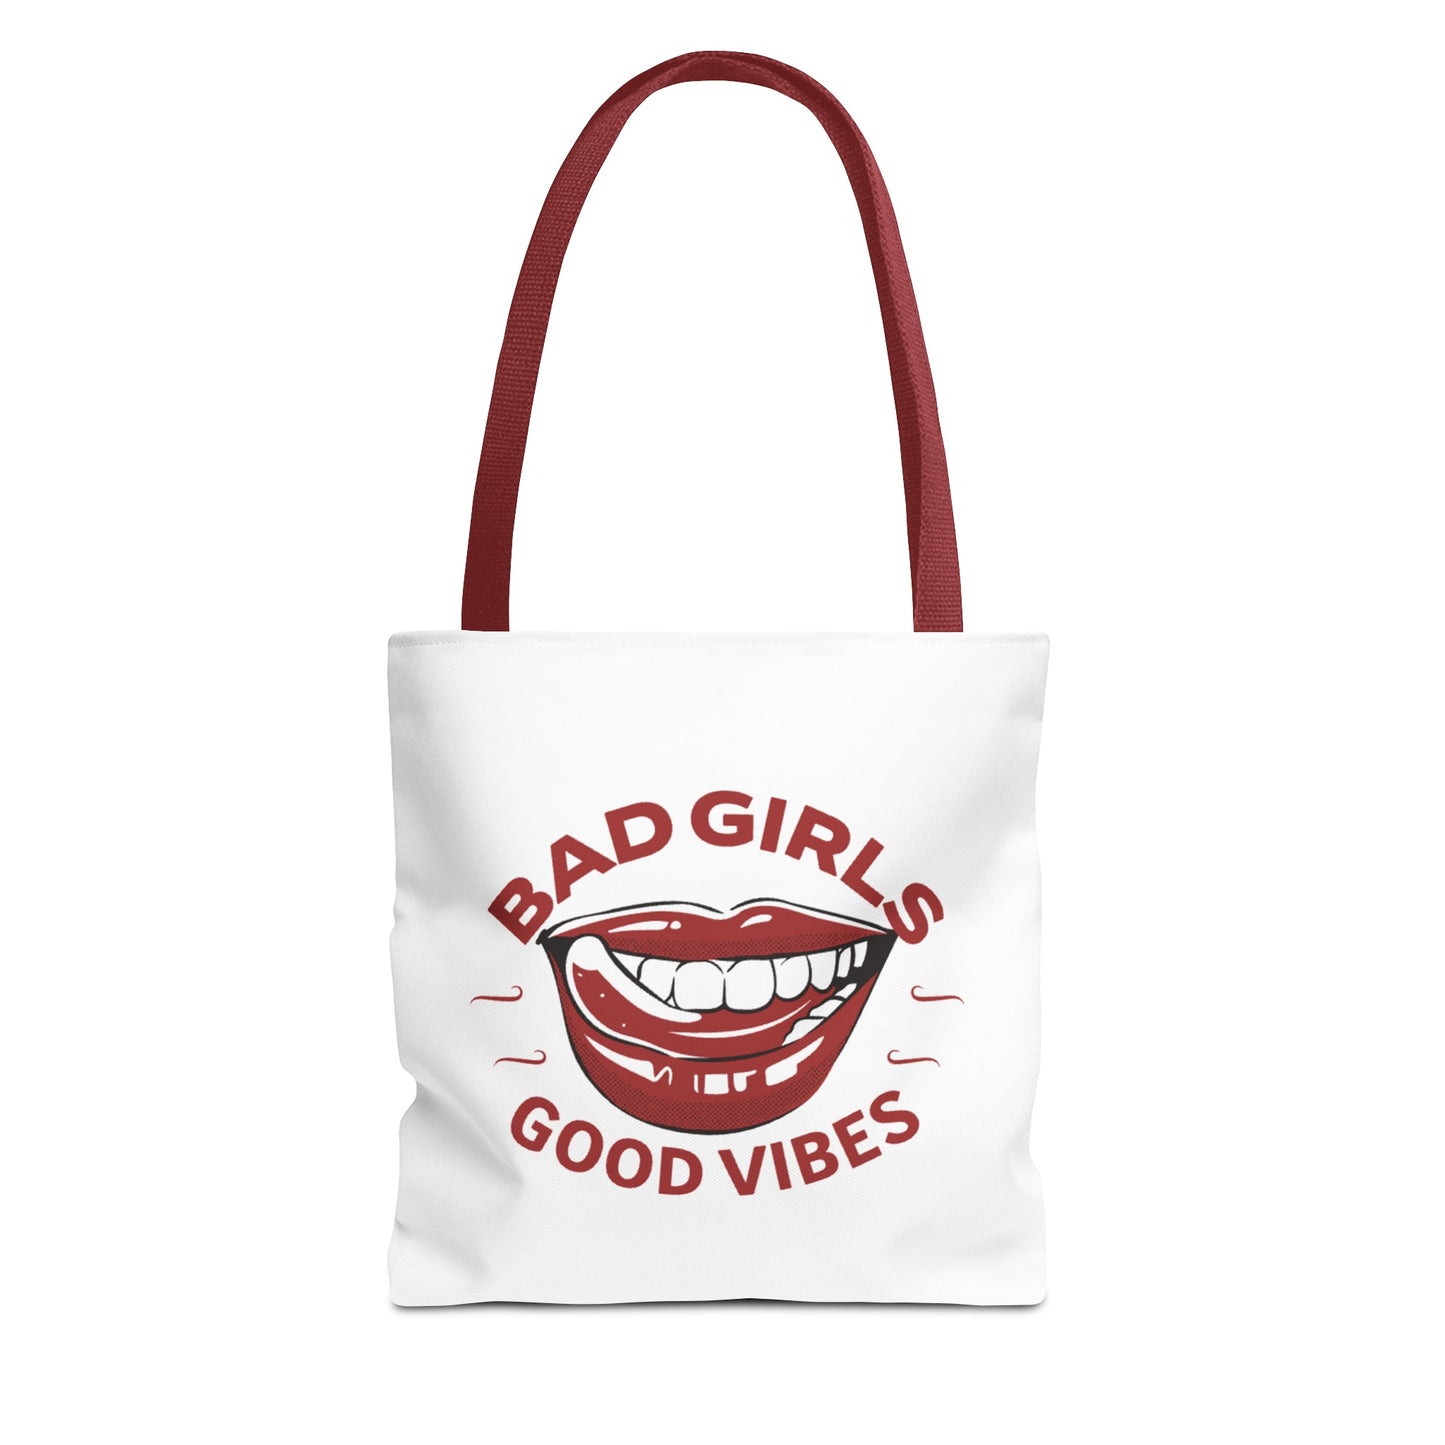 Soulbond Bad Girls Good Vibes tote bag